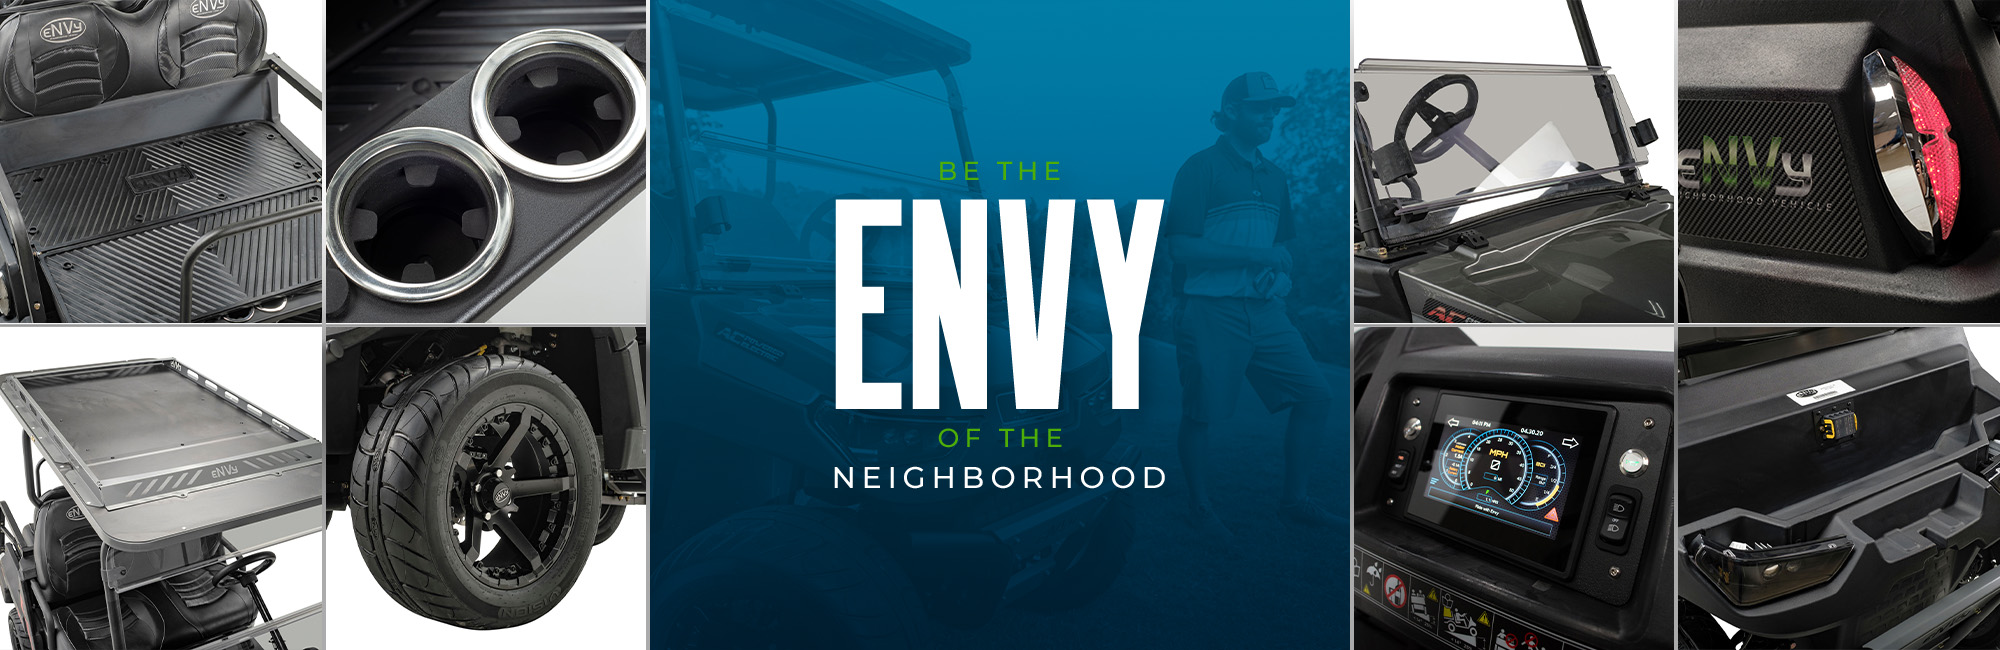 Be the Envy of the Neighborhood Advertisement